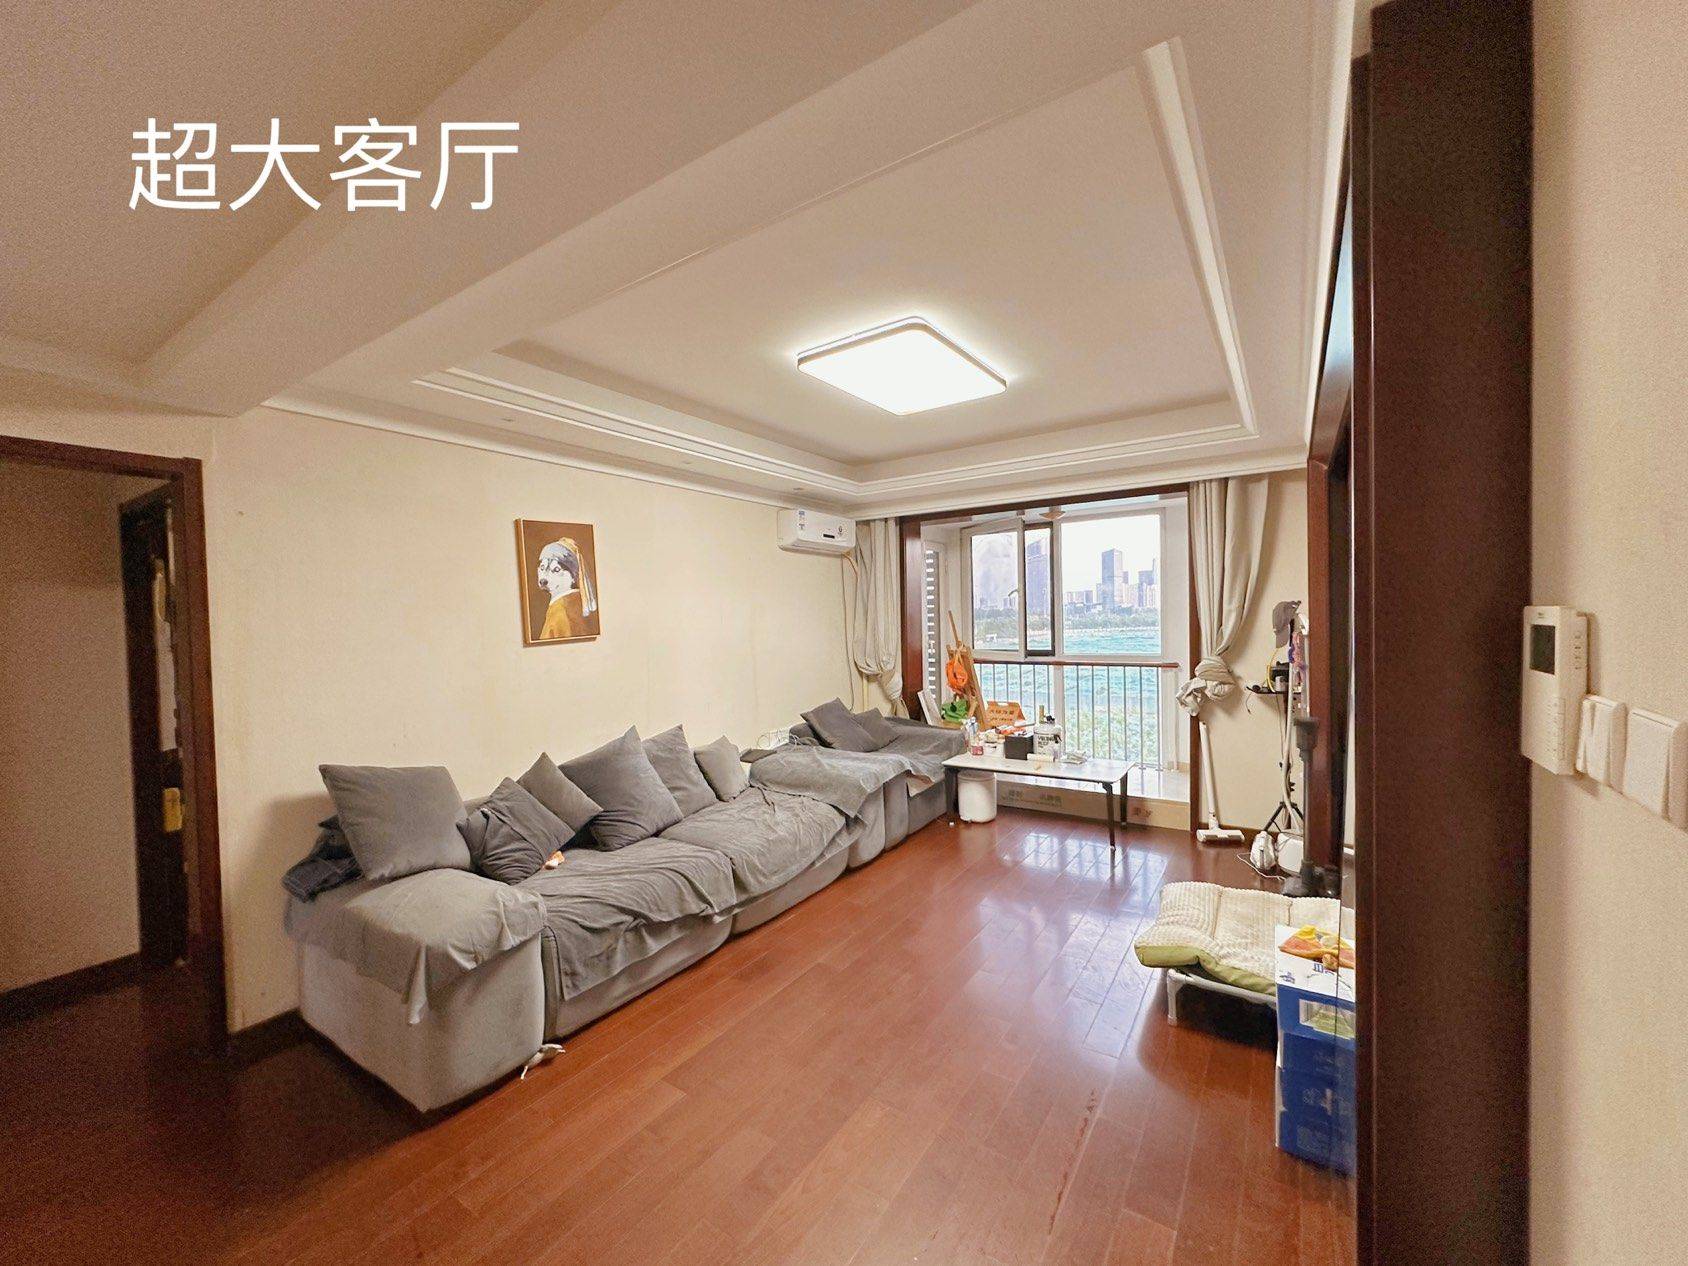 Beijing-Tongzhou-Cozy Home,Clean&Comfy,No Gender Limit,Hustle & Bustle,“Friends”,Chilled,LGBTQ Friendly